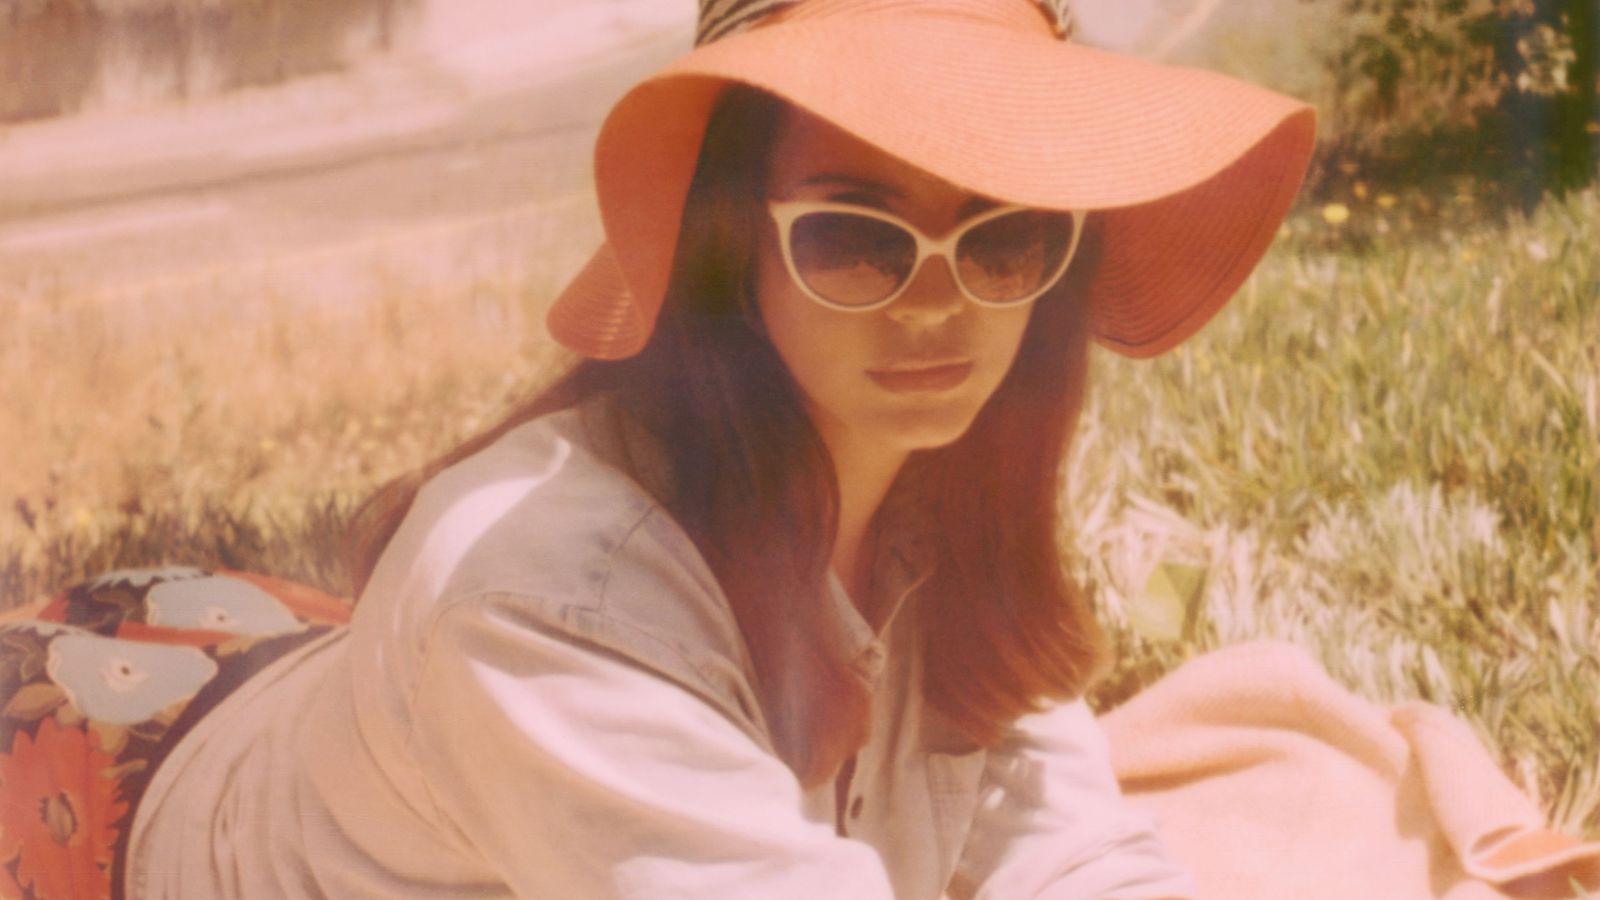 On Honeymoon, Lana Del Rey is in the director's chair